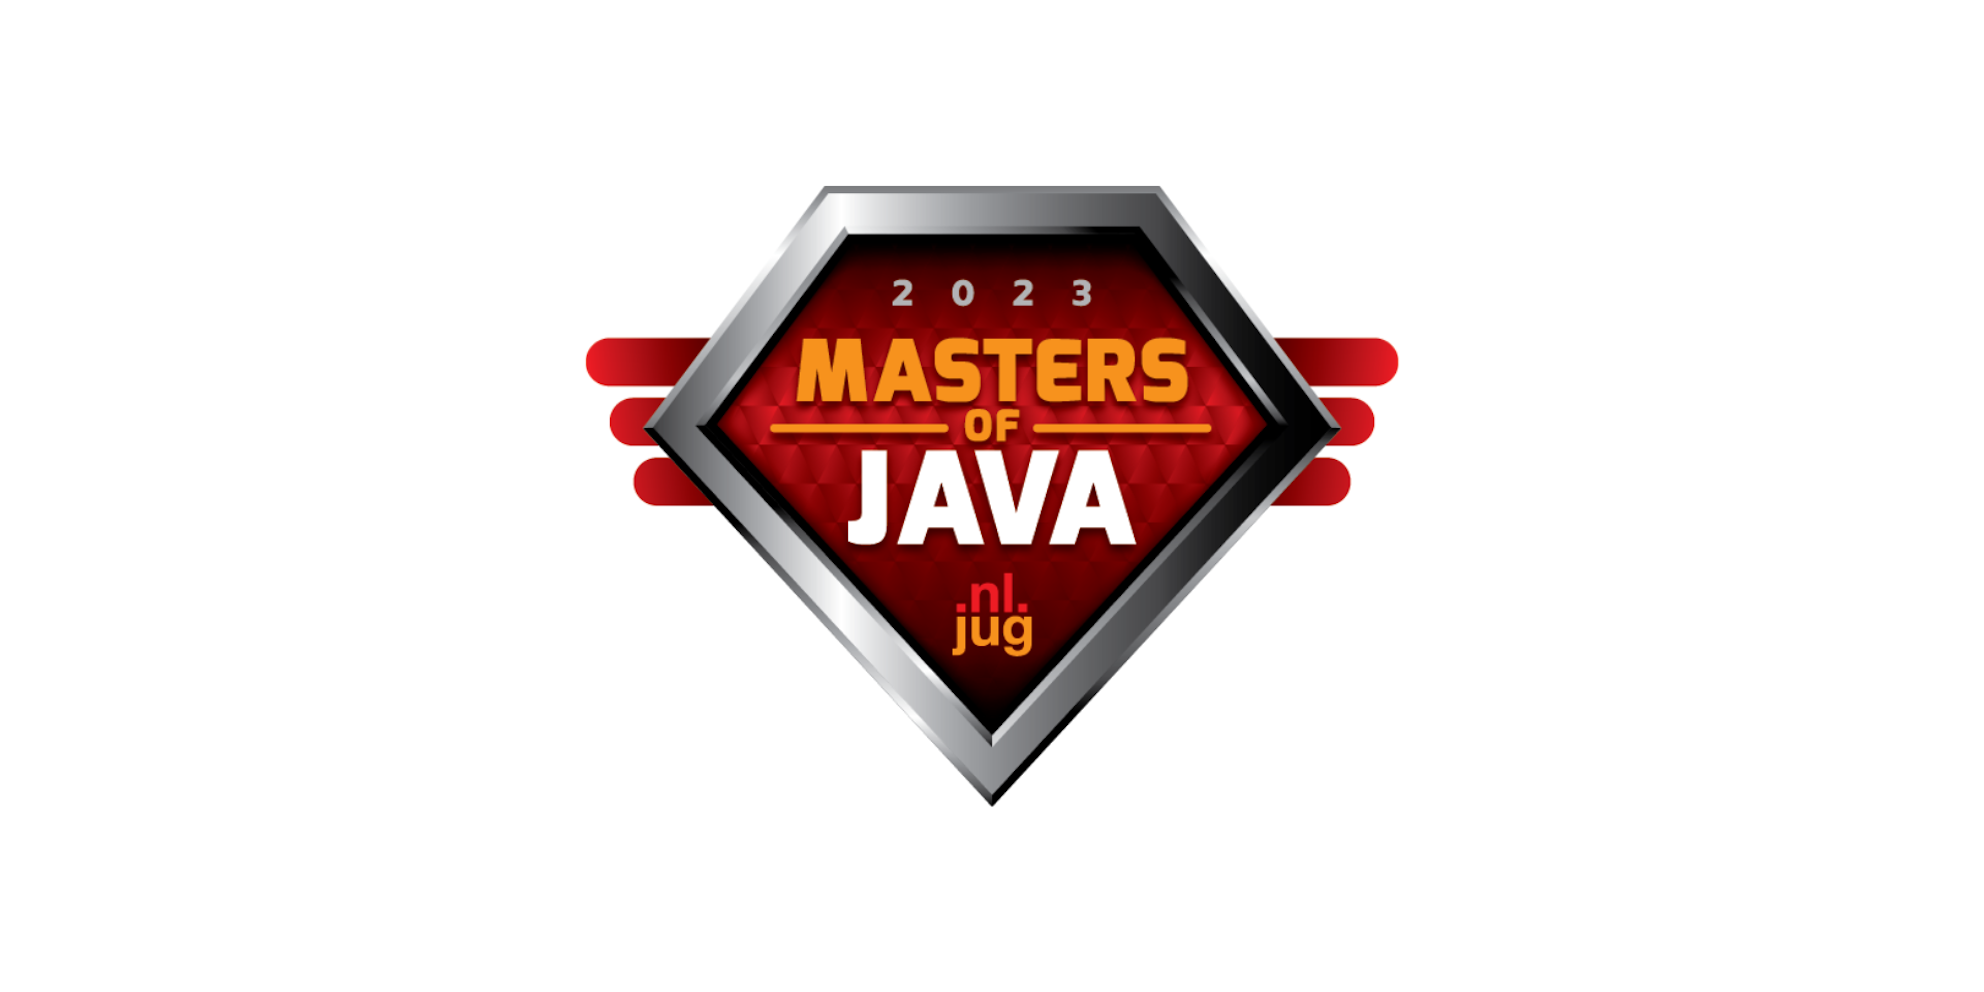 Masters of Java logo 2023